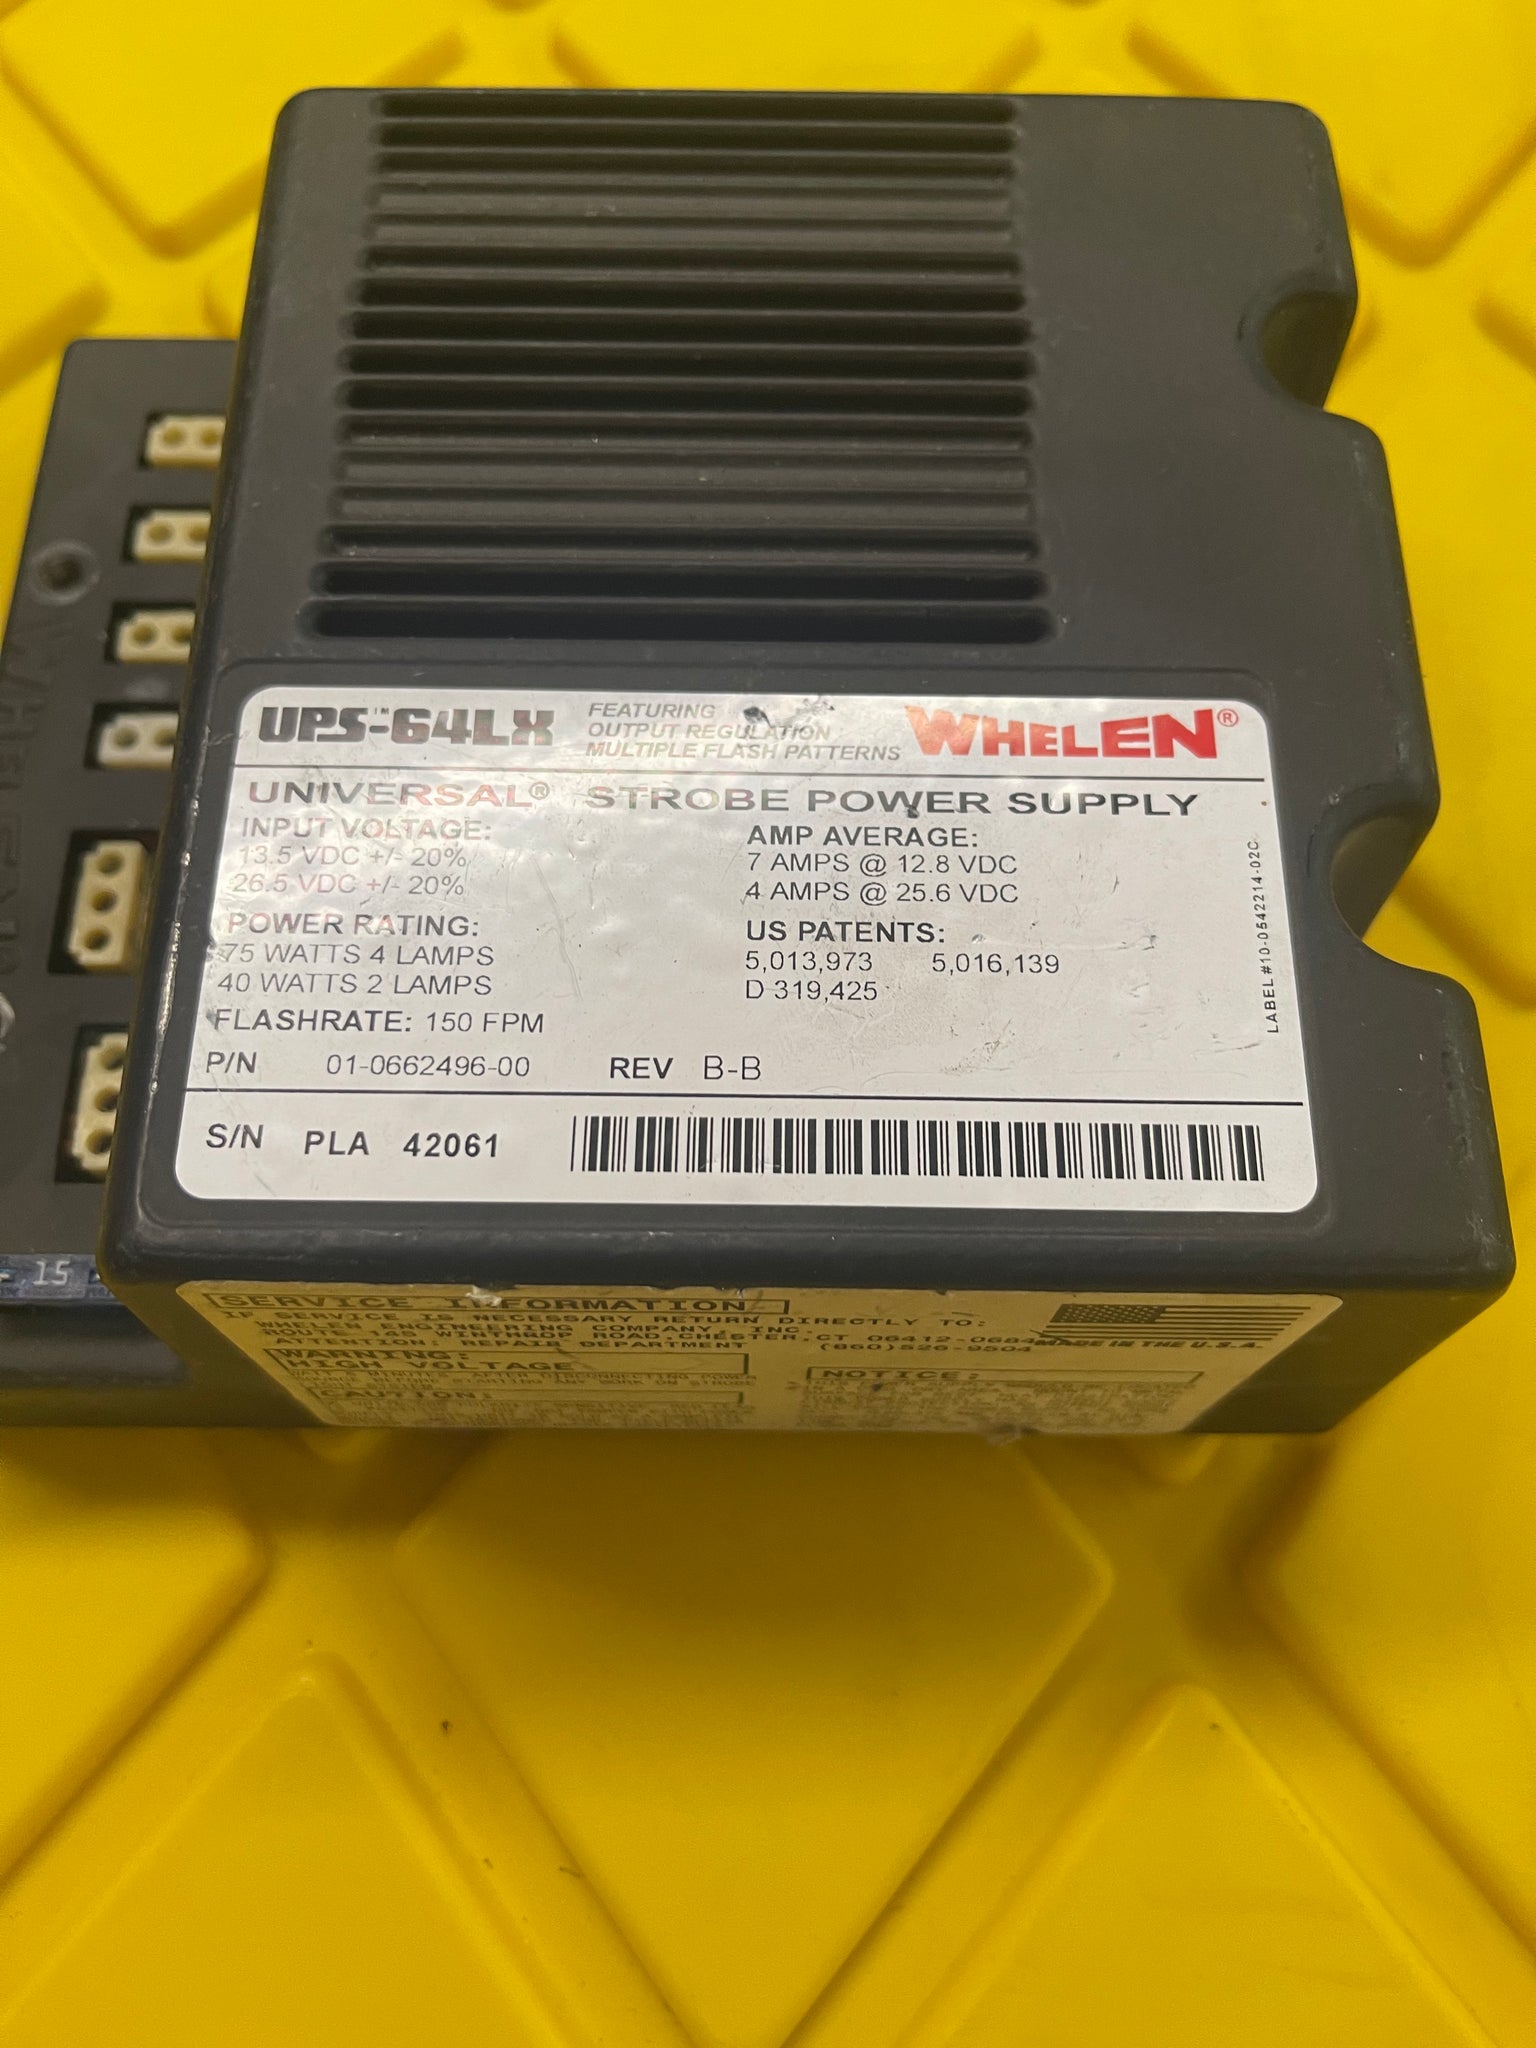 USED Whelen UPS-64LX Universal Strobe Power Supply - PURGE